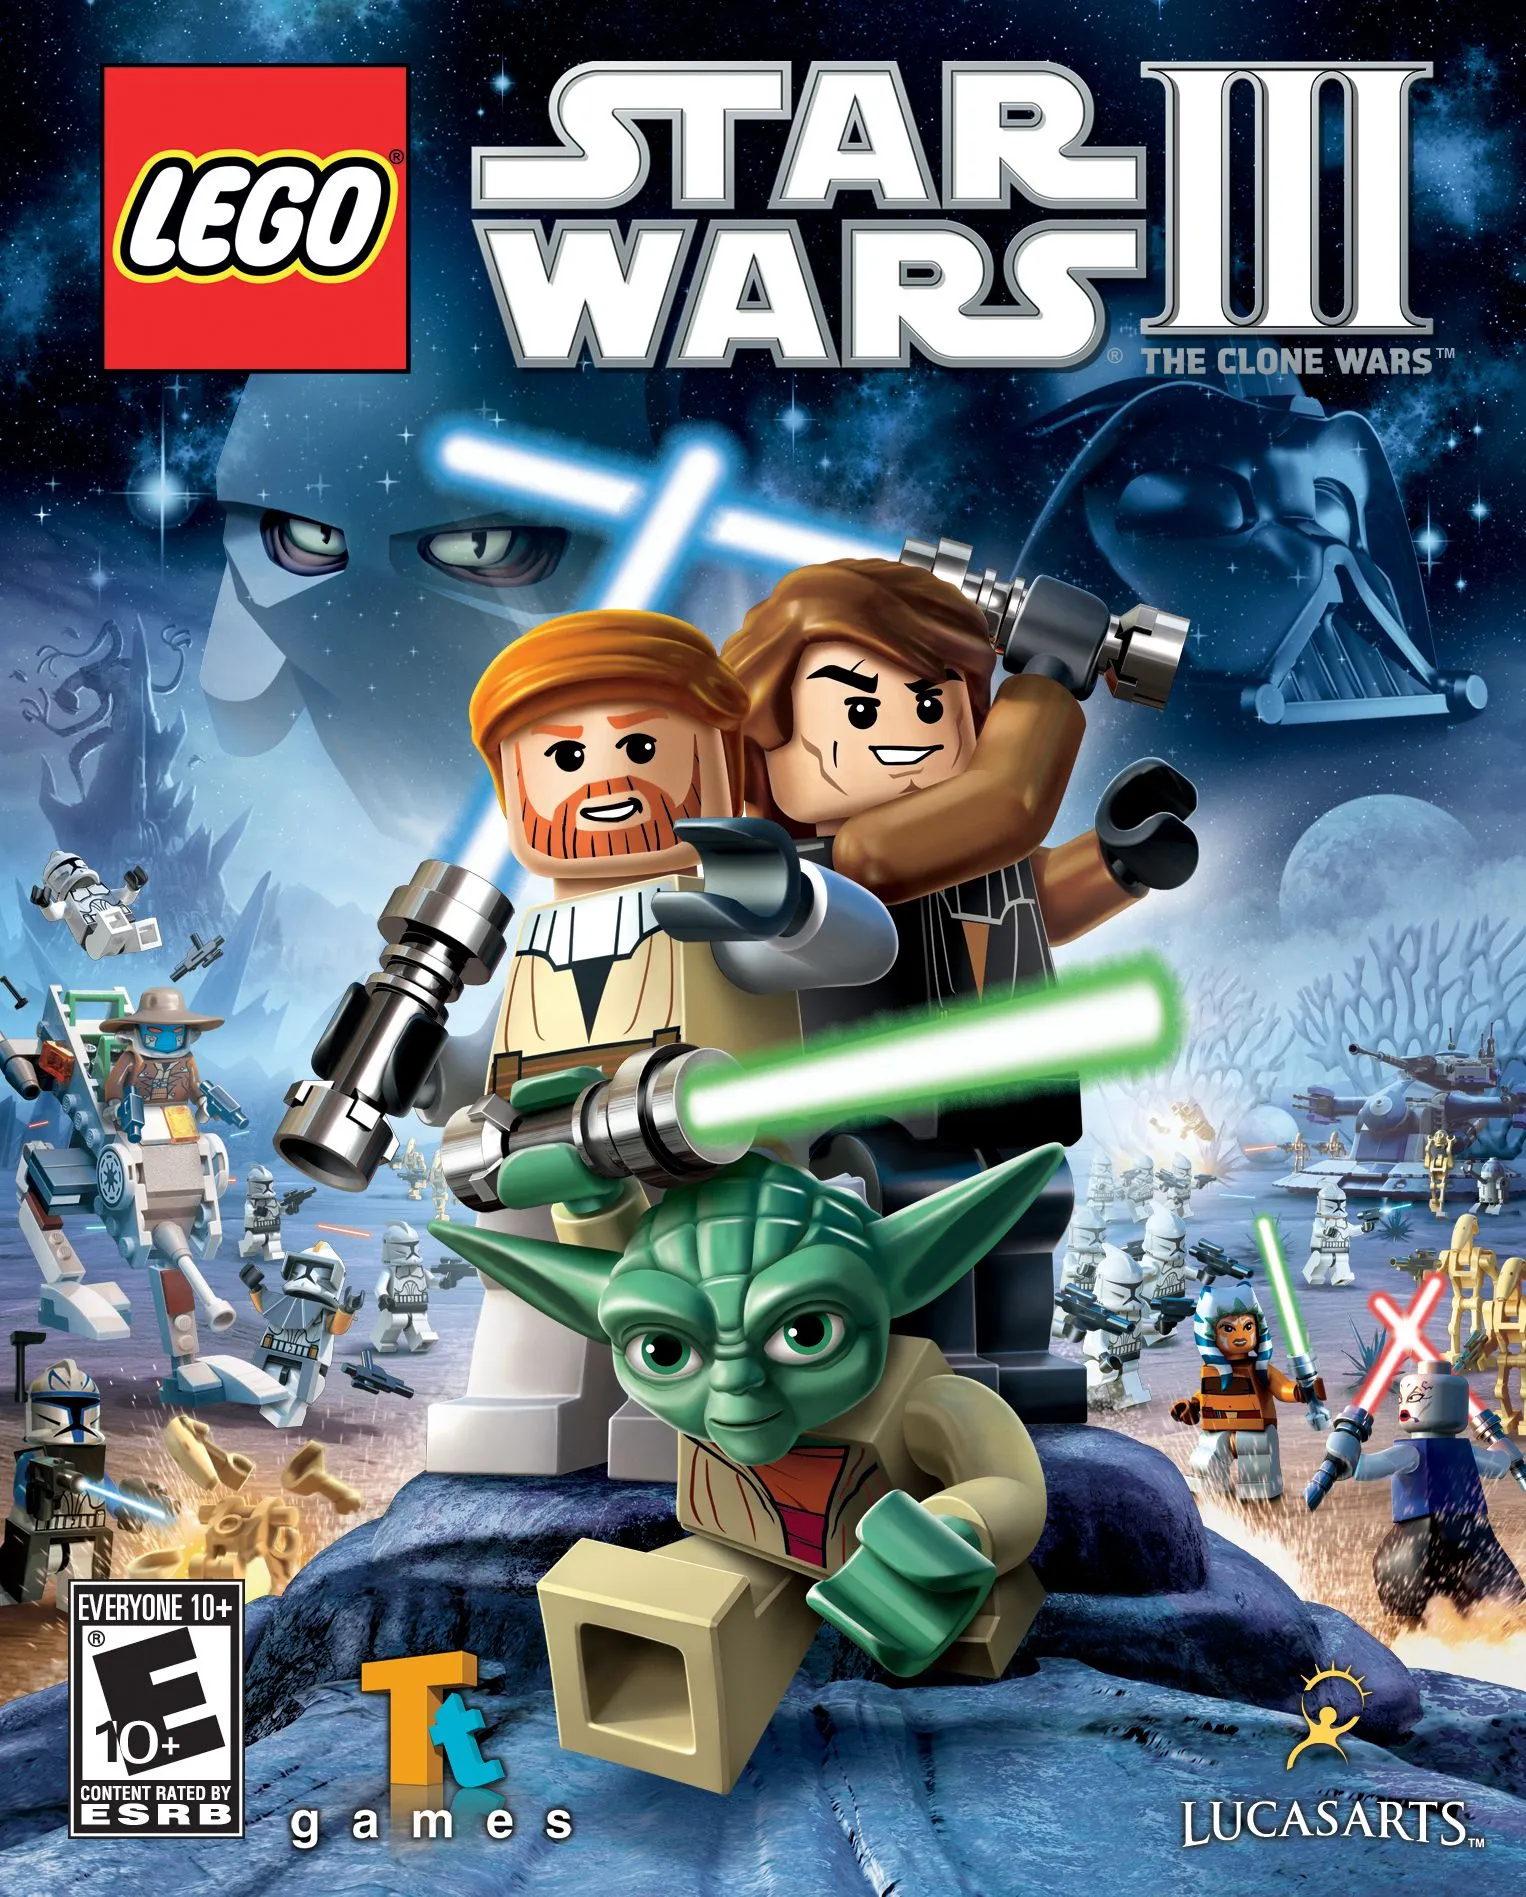 LEGO Star Wars III: The Clone Wars - Wookieepedia, the Star Wars Wiki